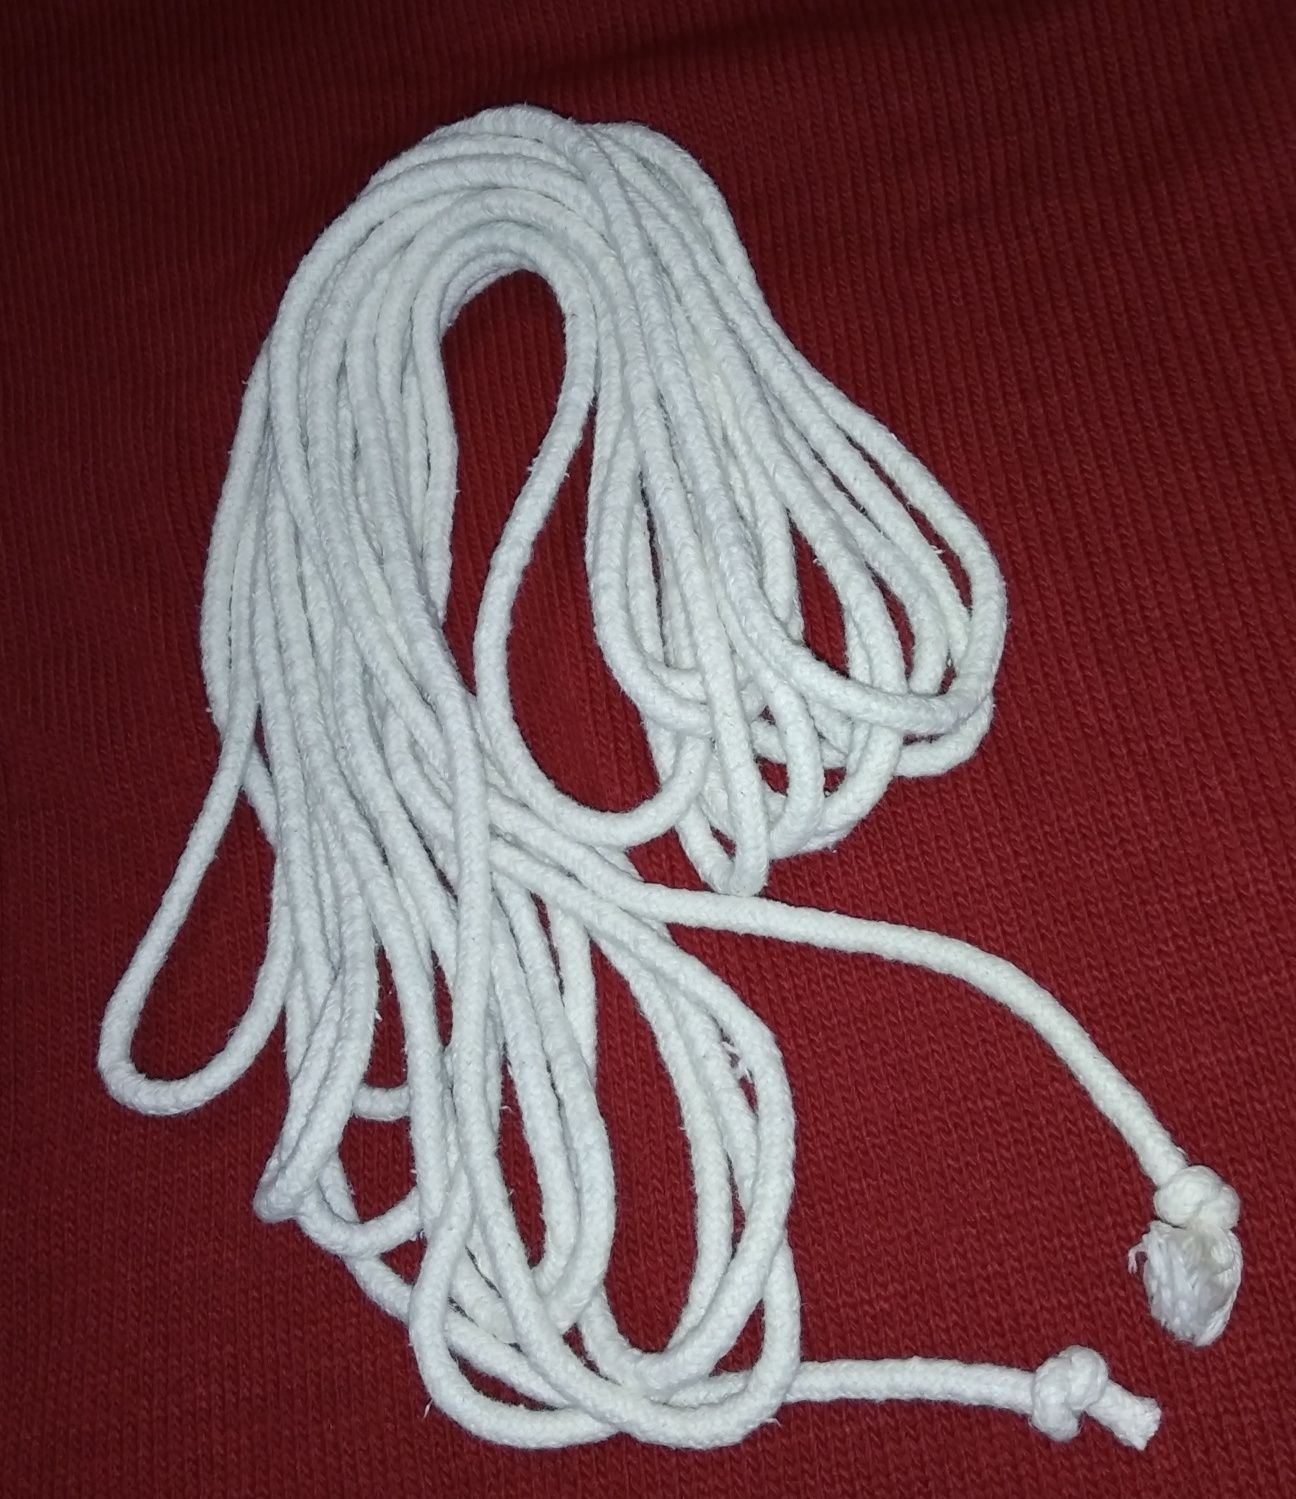 Крепкая толстая х/б веревка, тянется, спец. веревка 7 мм, веревка